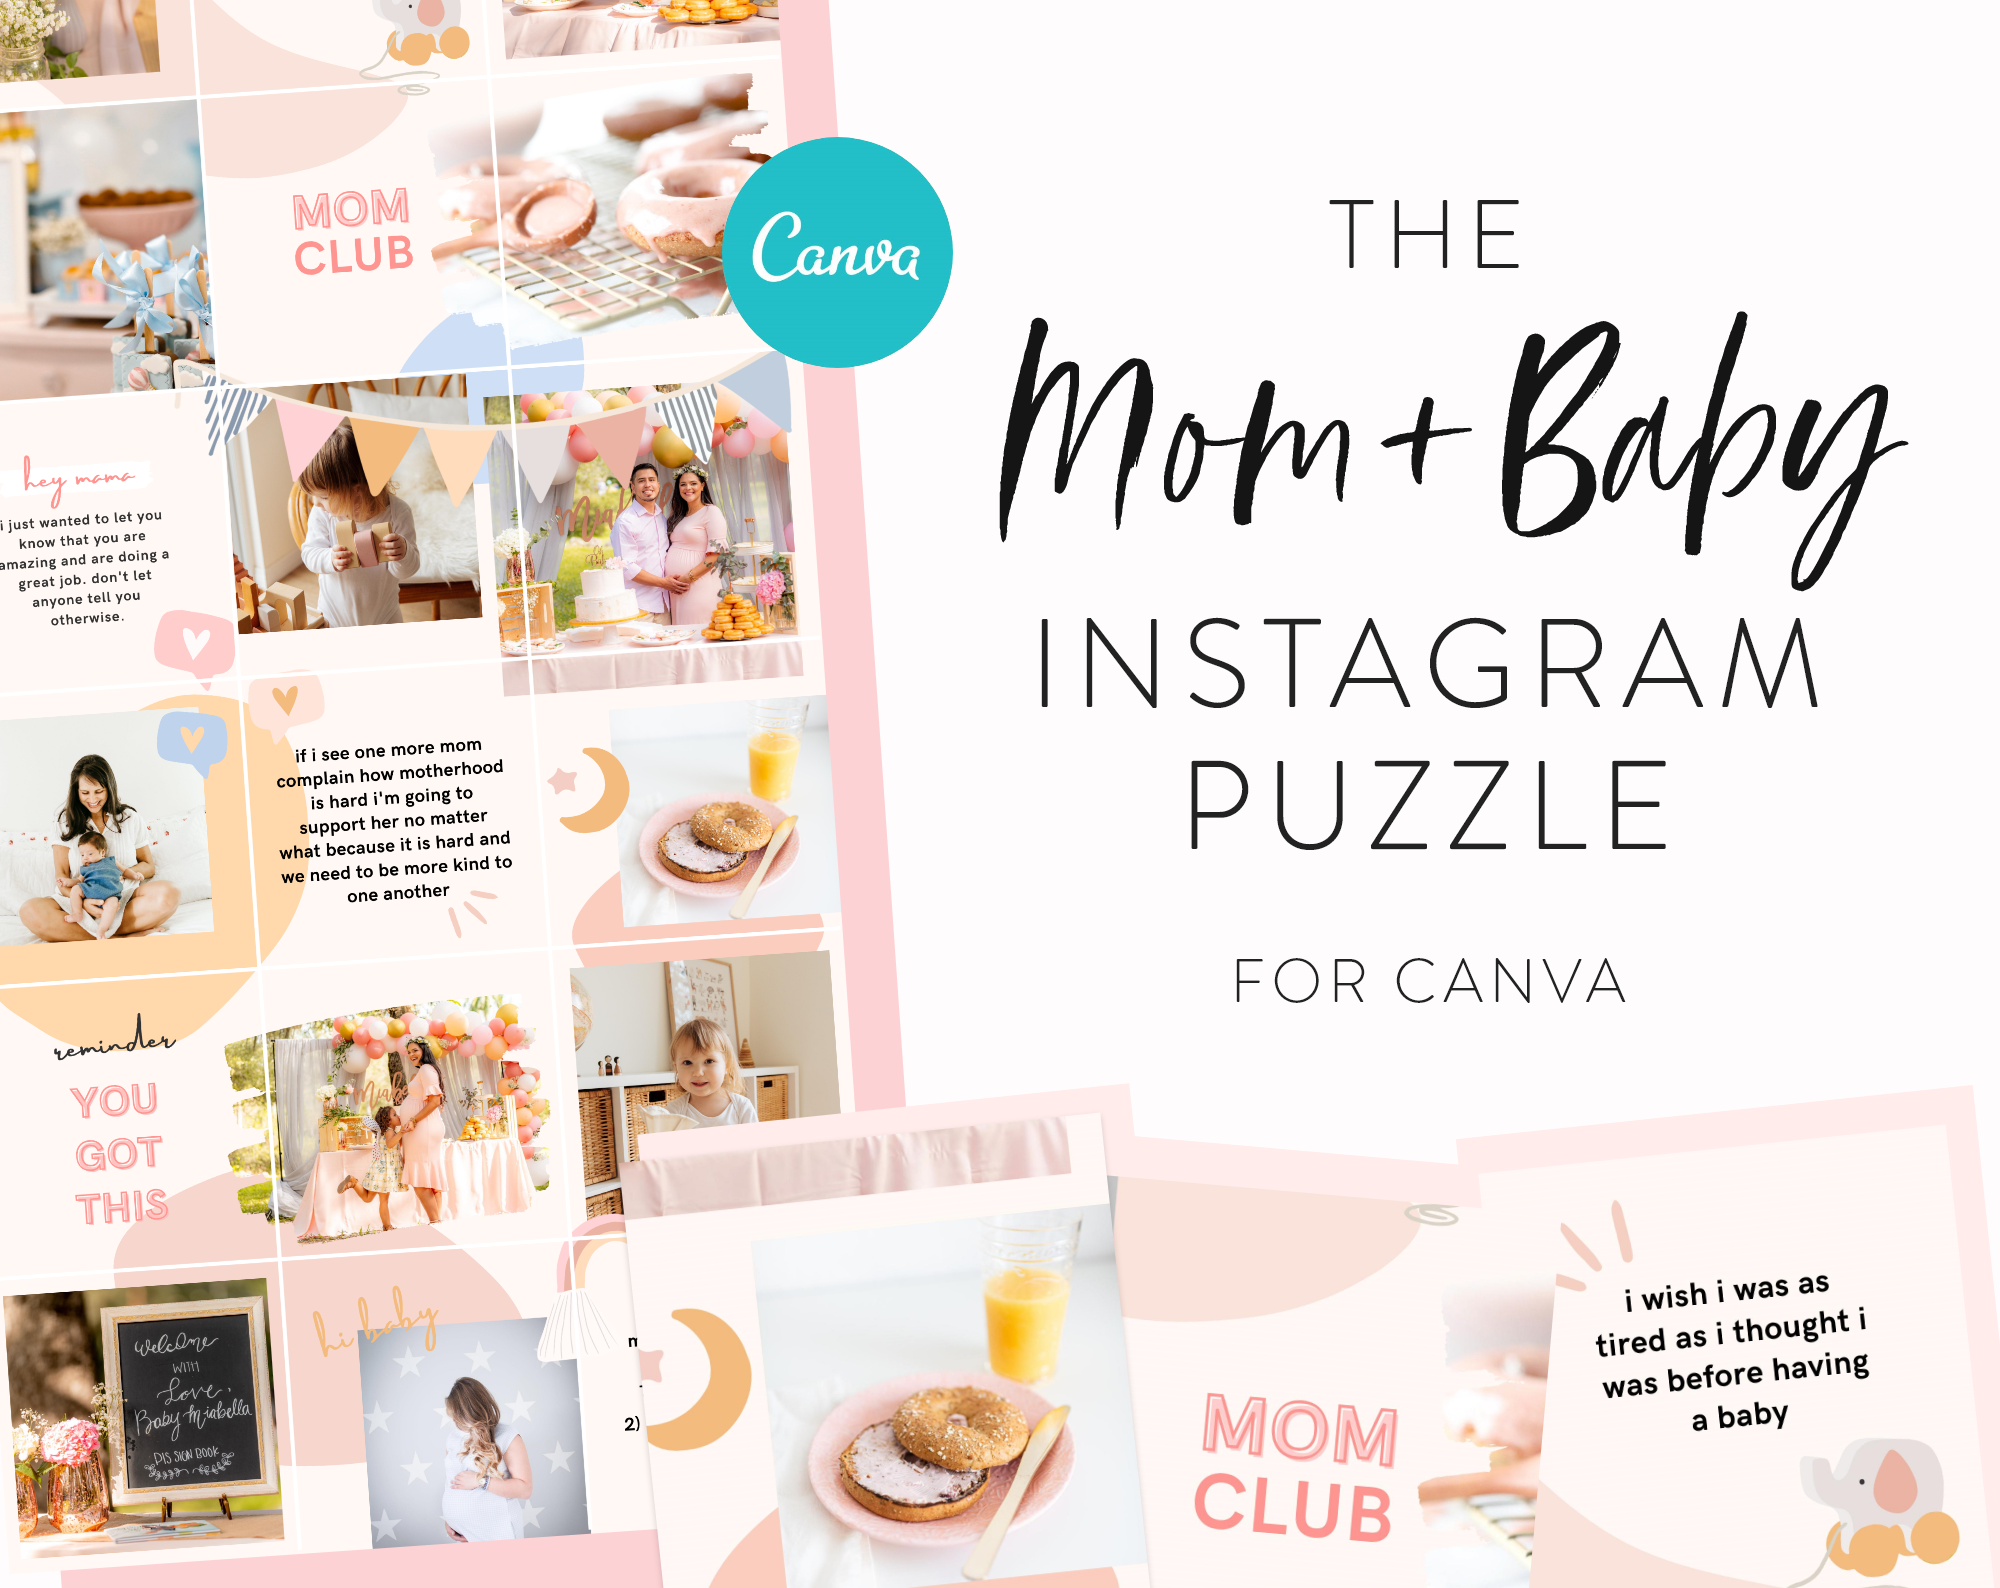 Creative Instagram Templates Small Business Templates Marketing bundle Pink Instagram Puzzle Templates Canva Social Media Templates